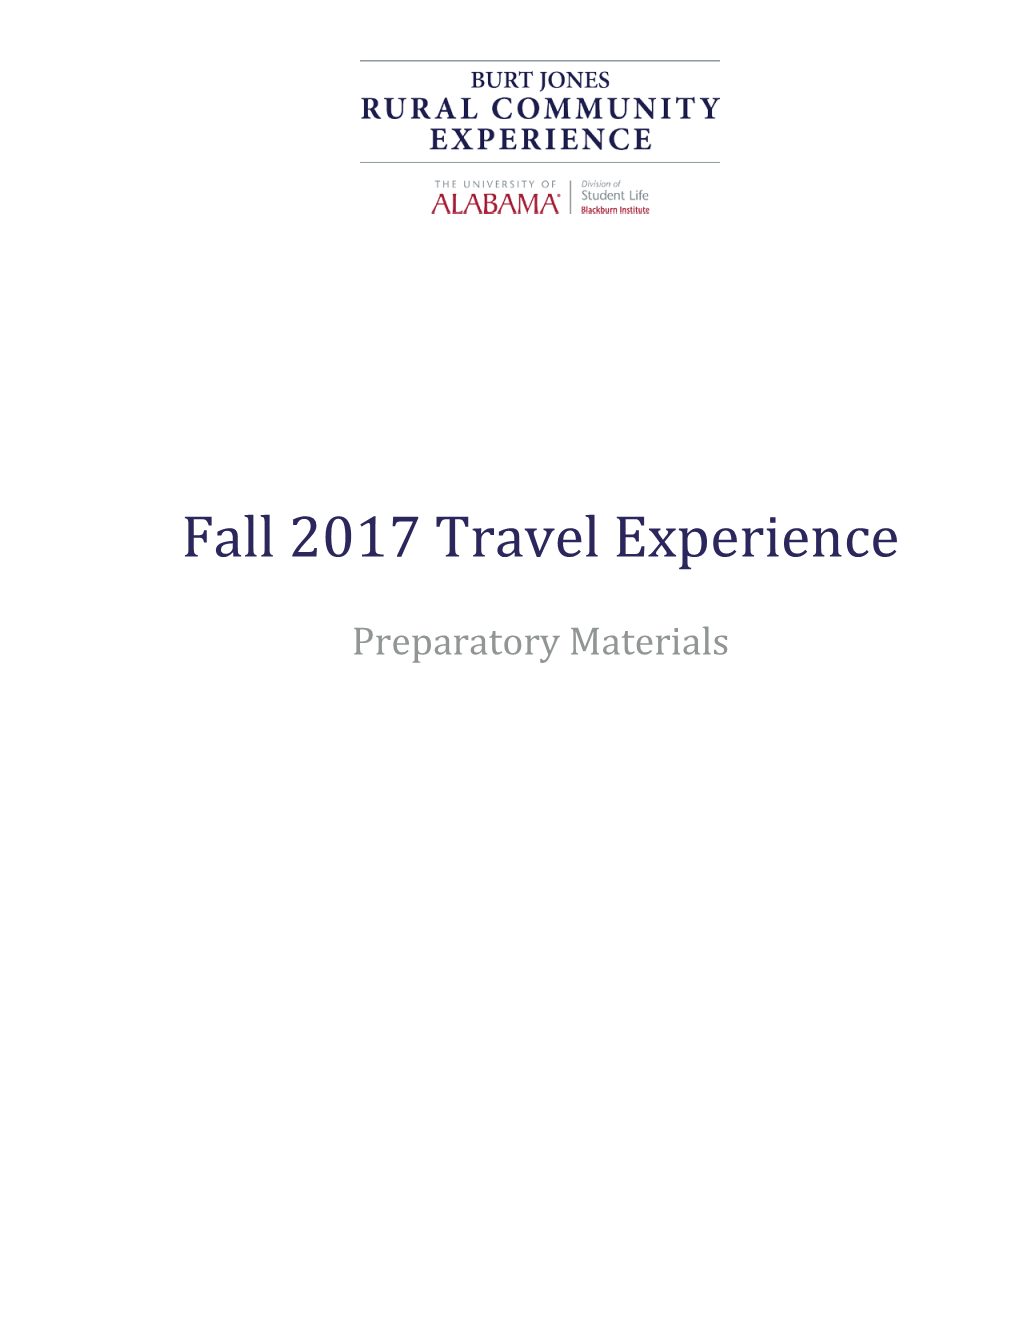 Fall 2017 Travel Experience